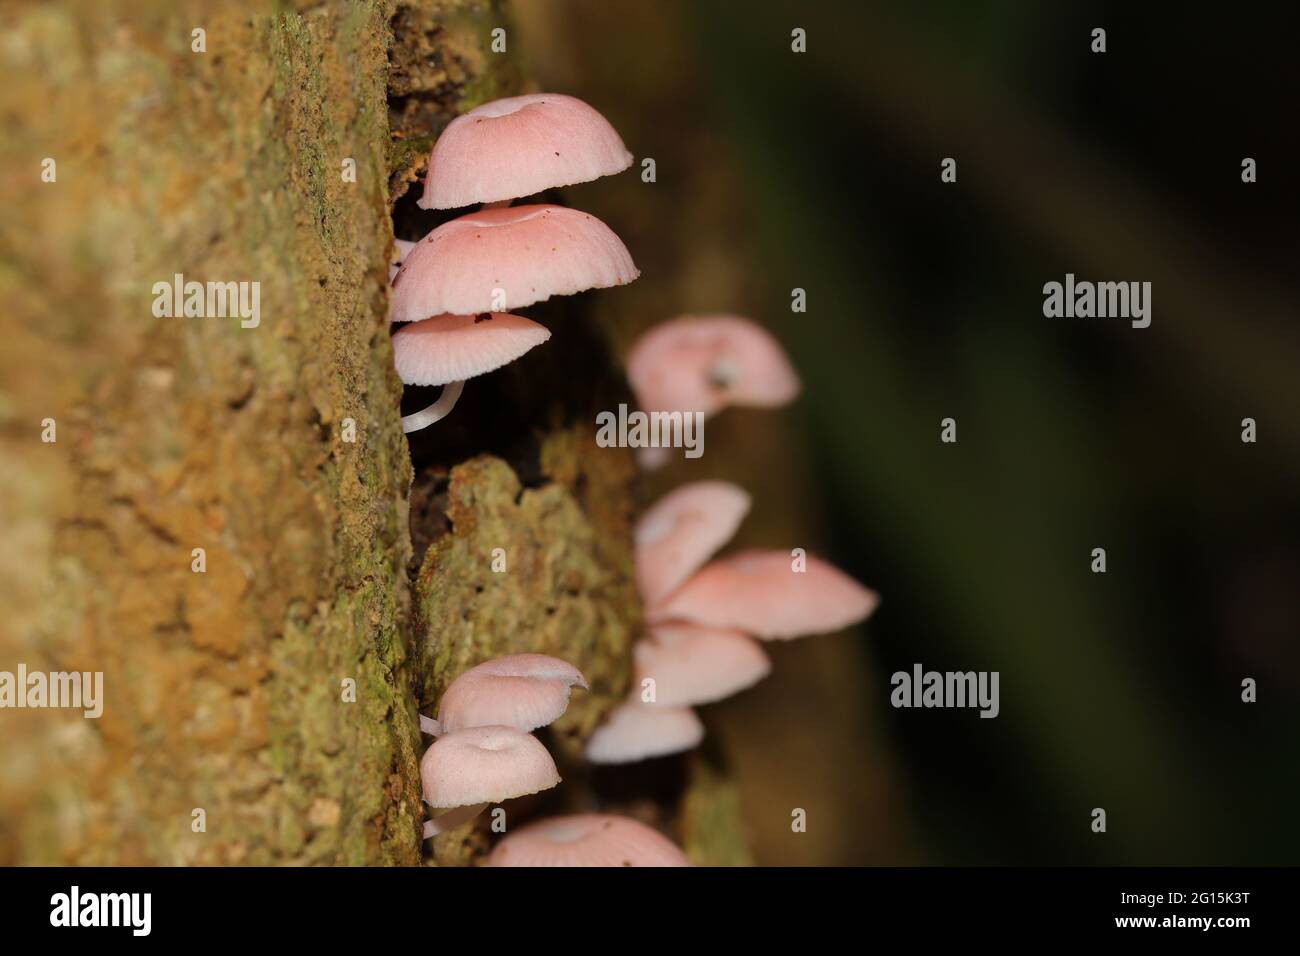 Racimos de setas rosadas que crecen en un tronco de árbol en un bosque lluvioso Foto de stock